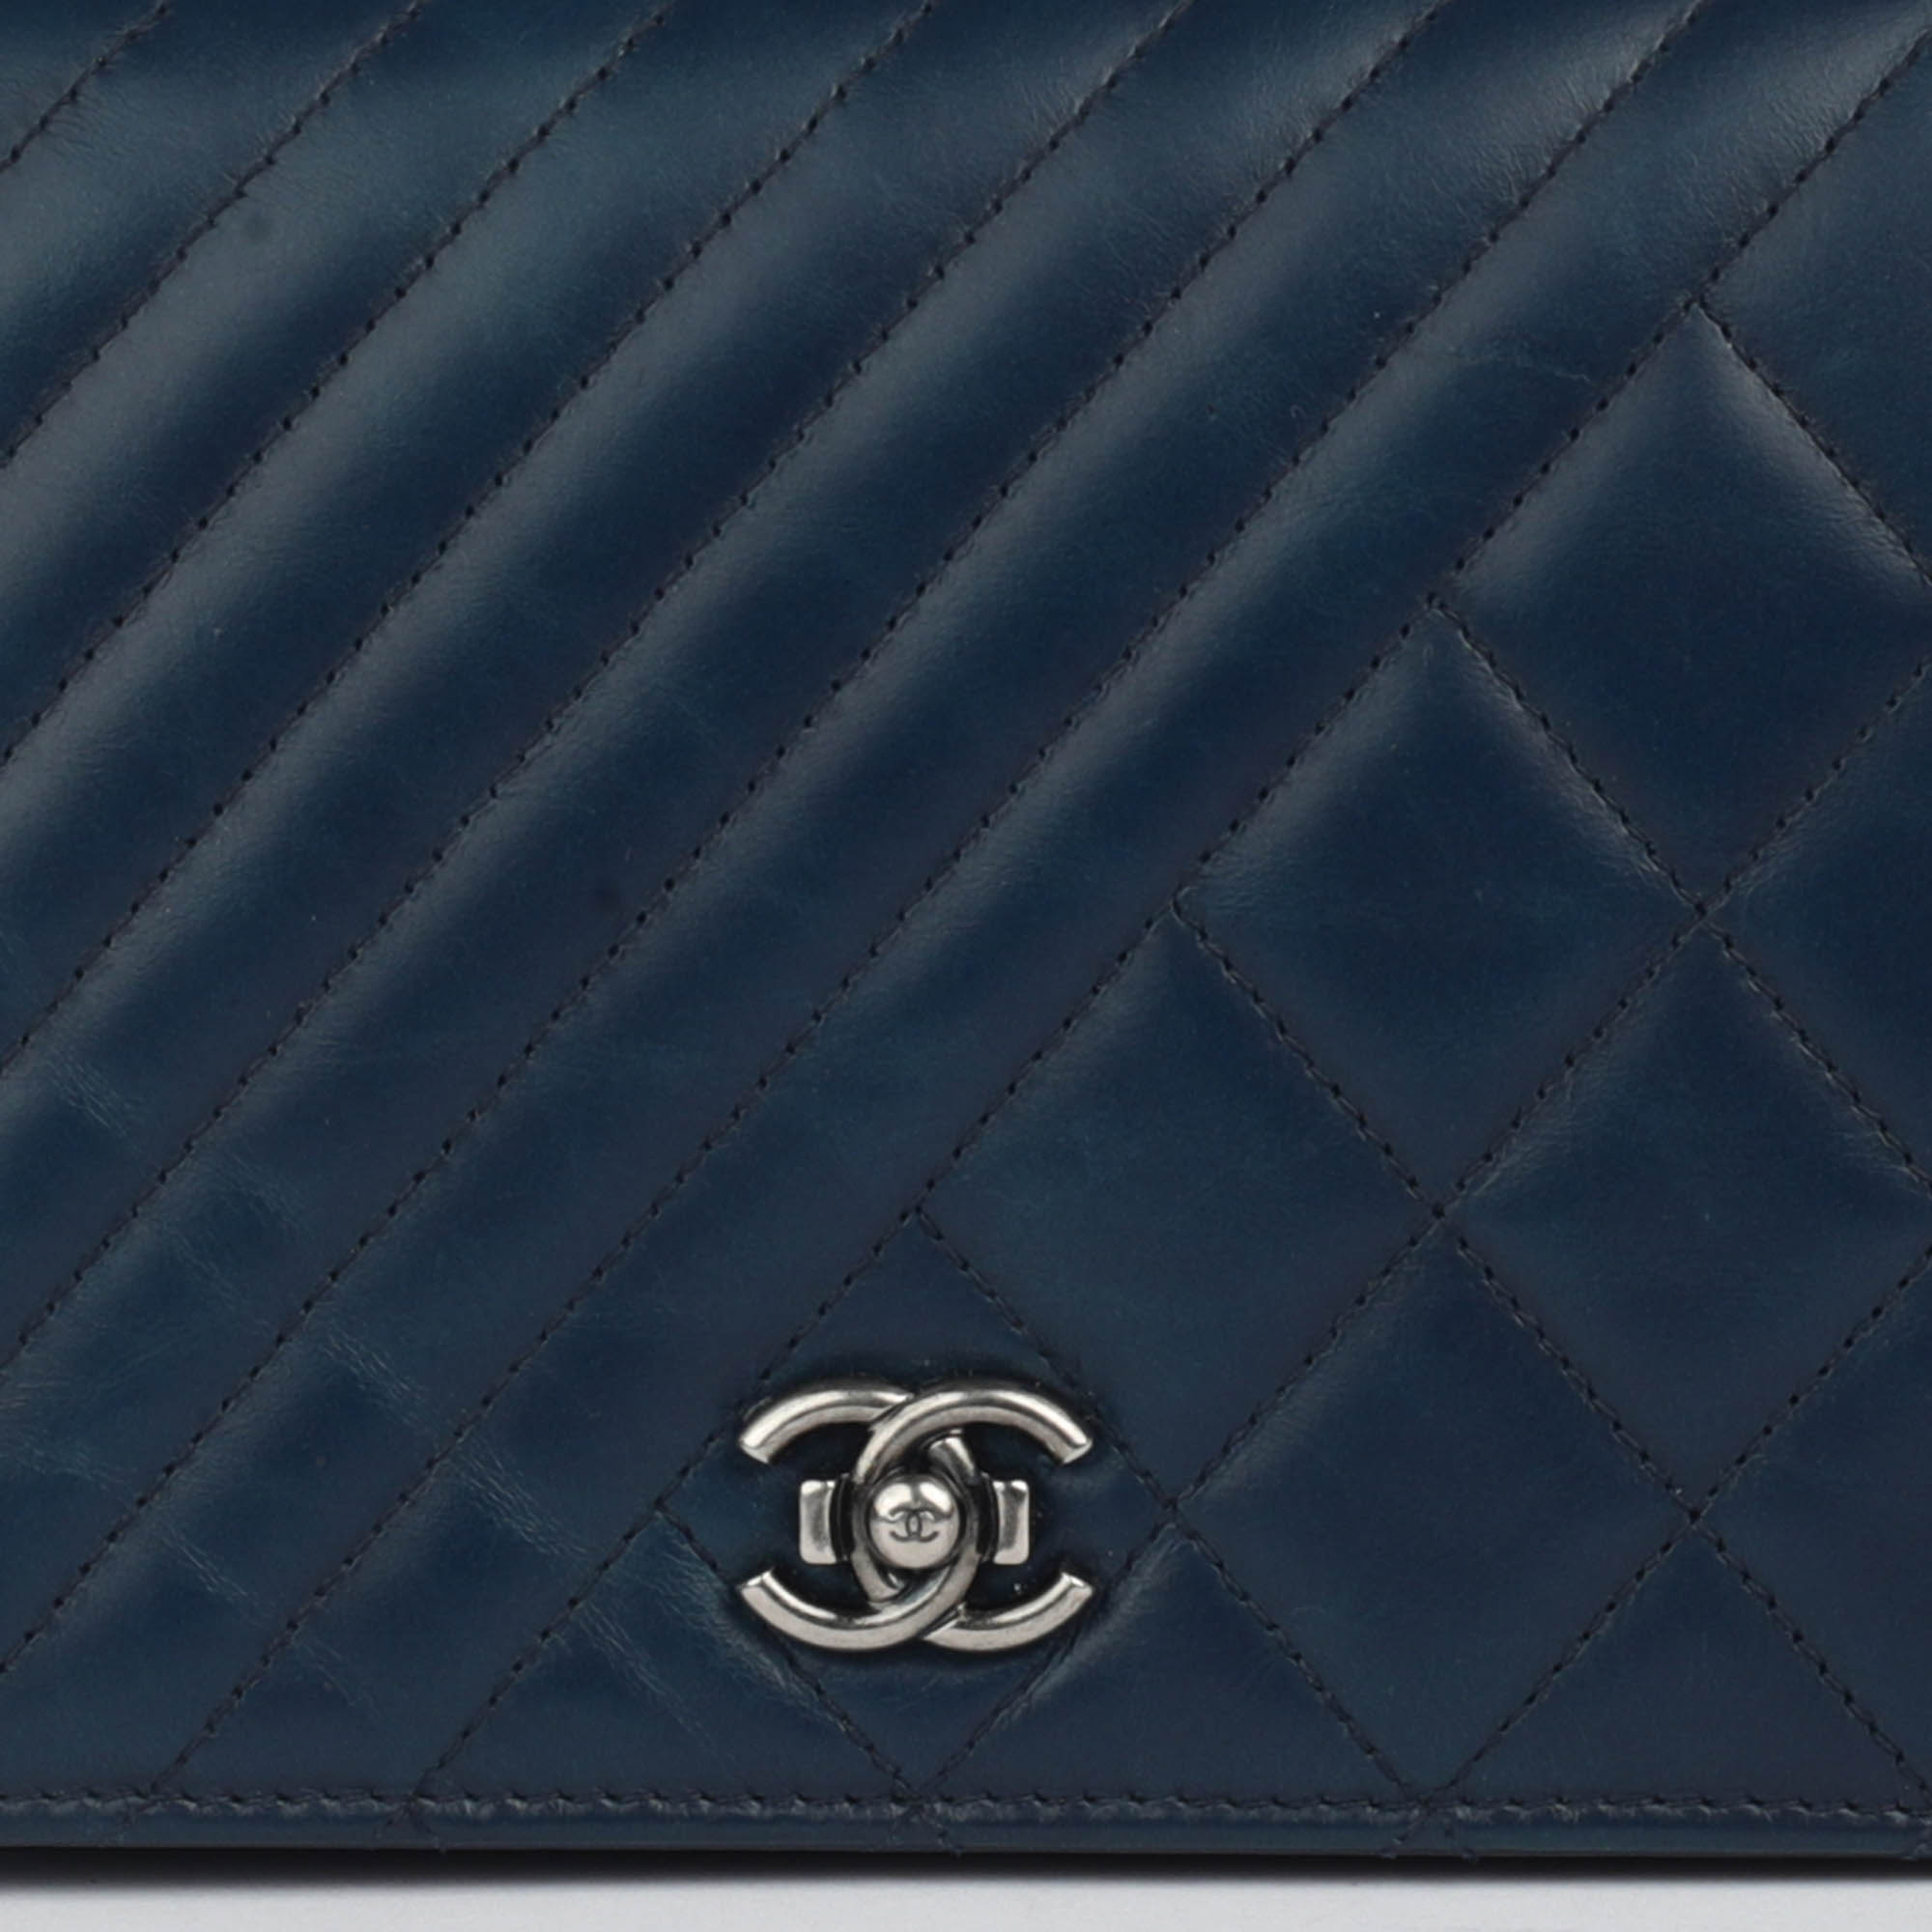 Chanel Navy Blue Lambskin Classic WOC Bag